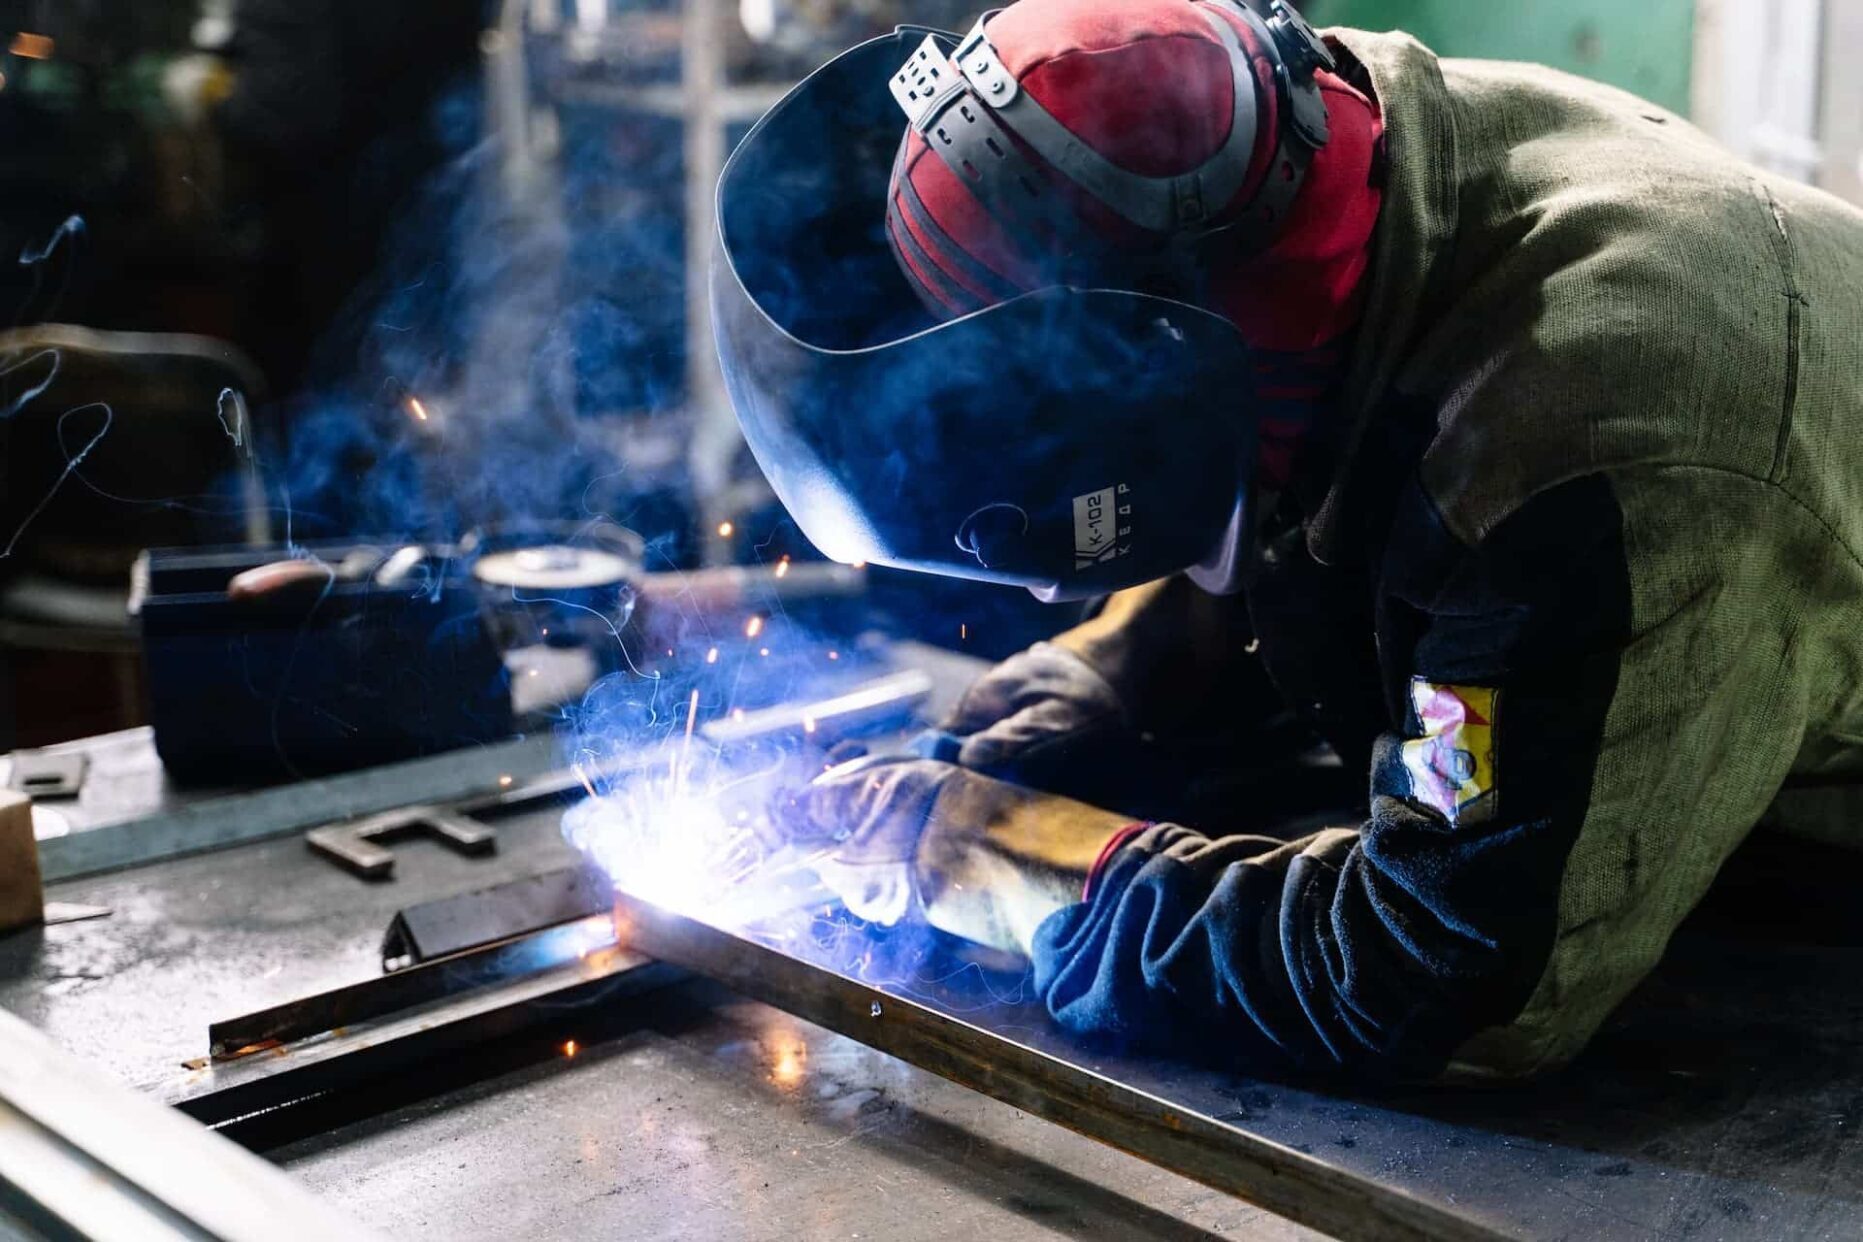 Man welding a piece of metal — Fabrication & Engine